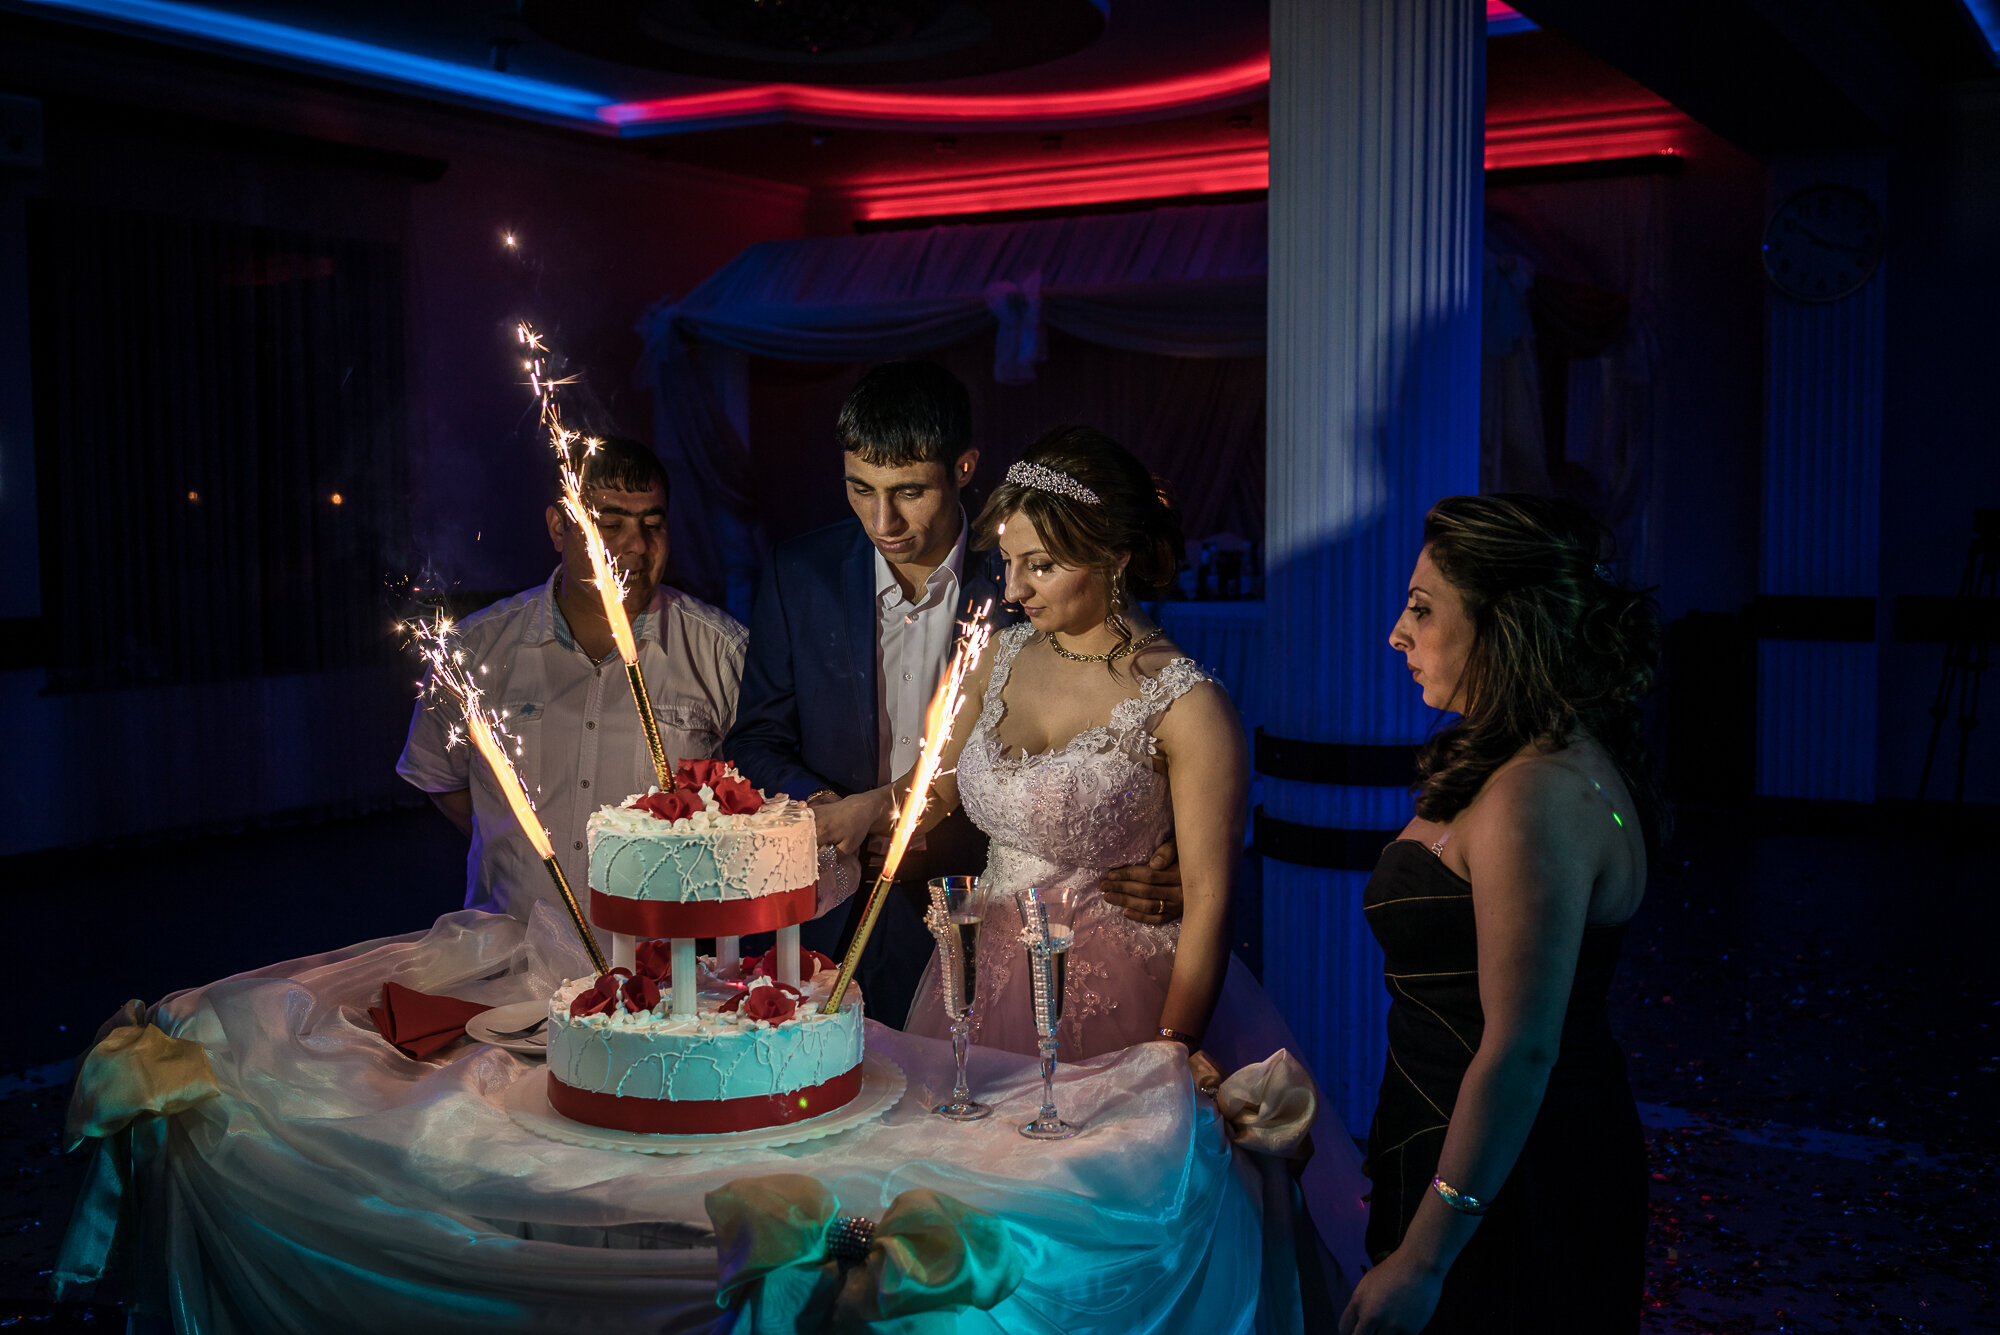  Groom Davit Simonyan, 24, and bride Shogher Hovsepyan, 25, prepare to cut the cake at their wedding reception. Stepanakert, Nagorno-Karabakh. 2015. 